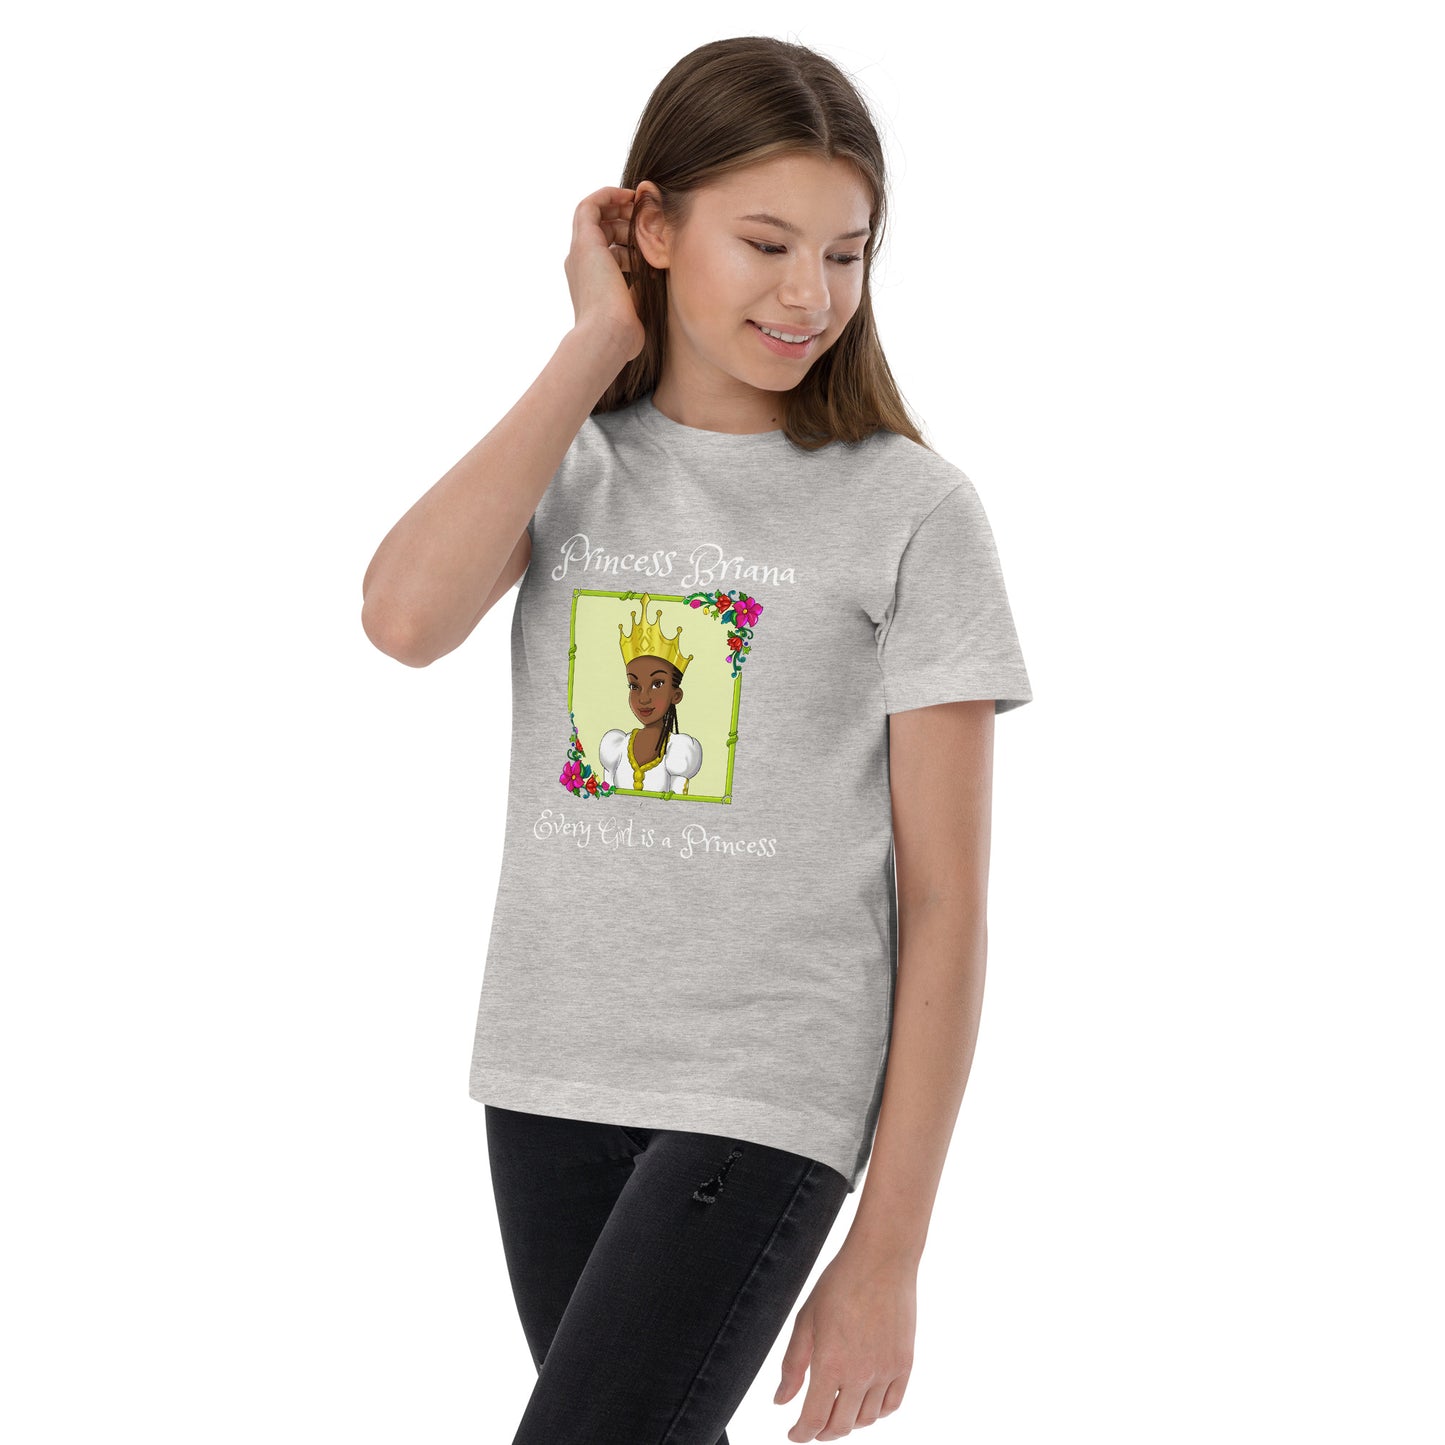 Princess Briana Youth jersey t-shirt